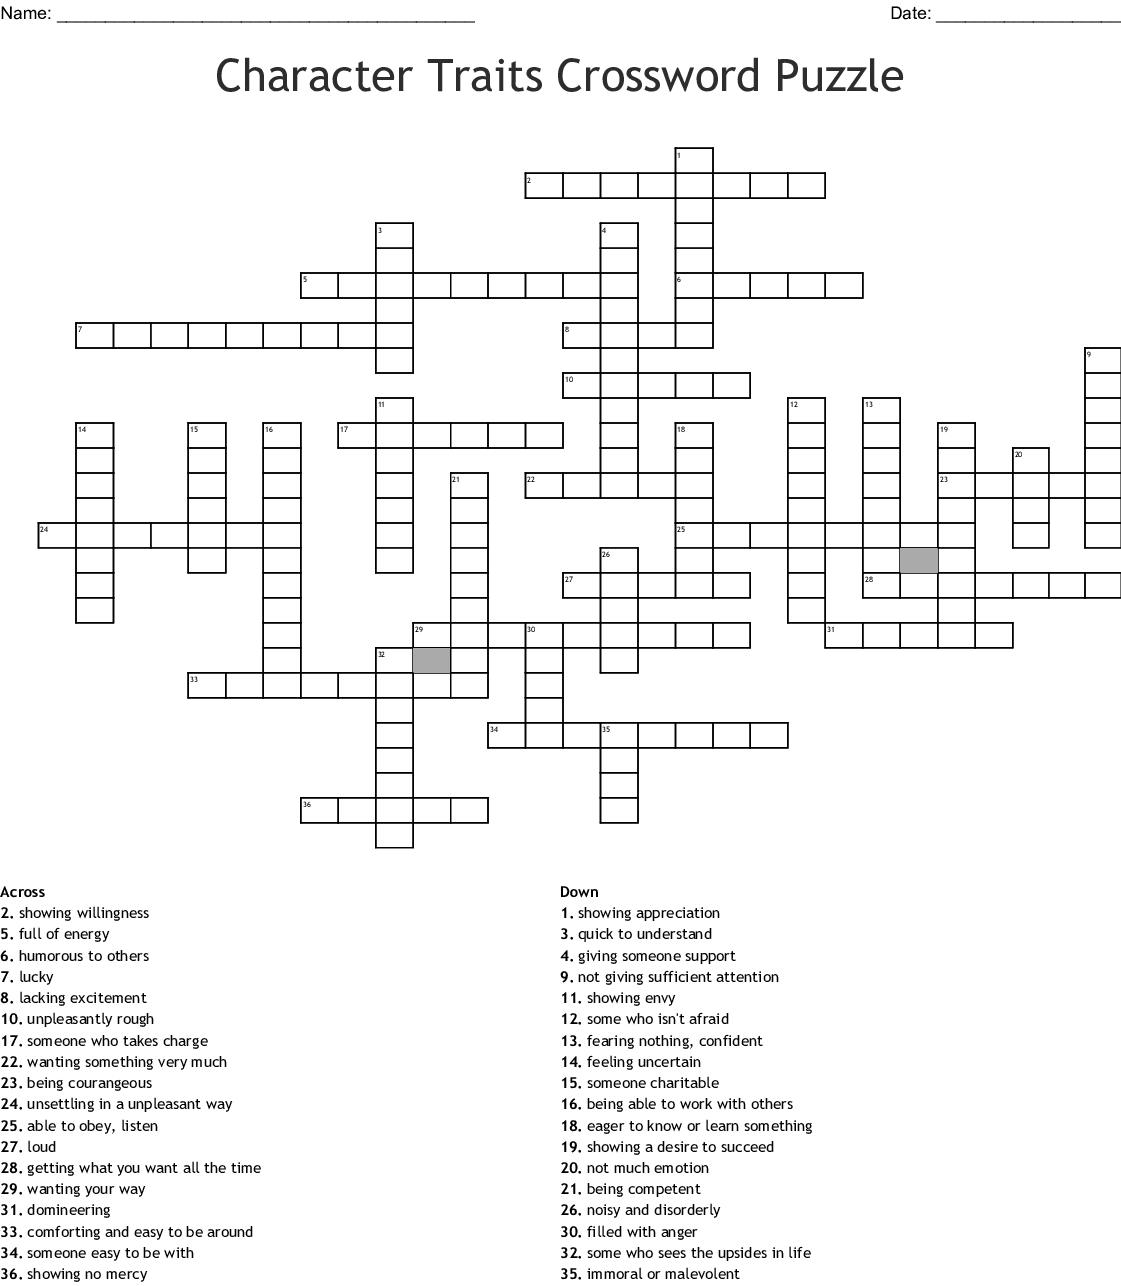 crossword-puzzle-about-character-trait-printable-james-crossword-puzzles